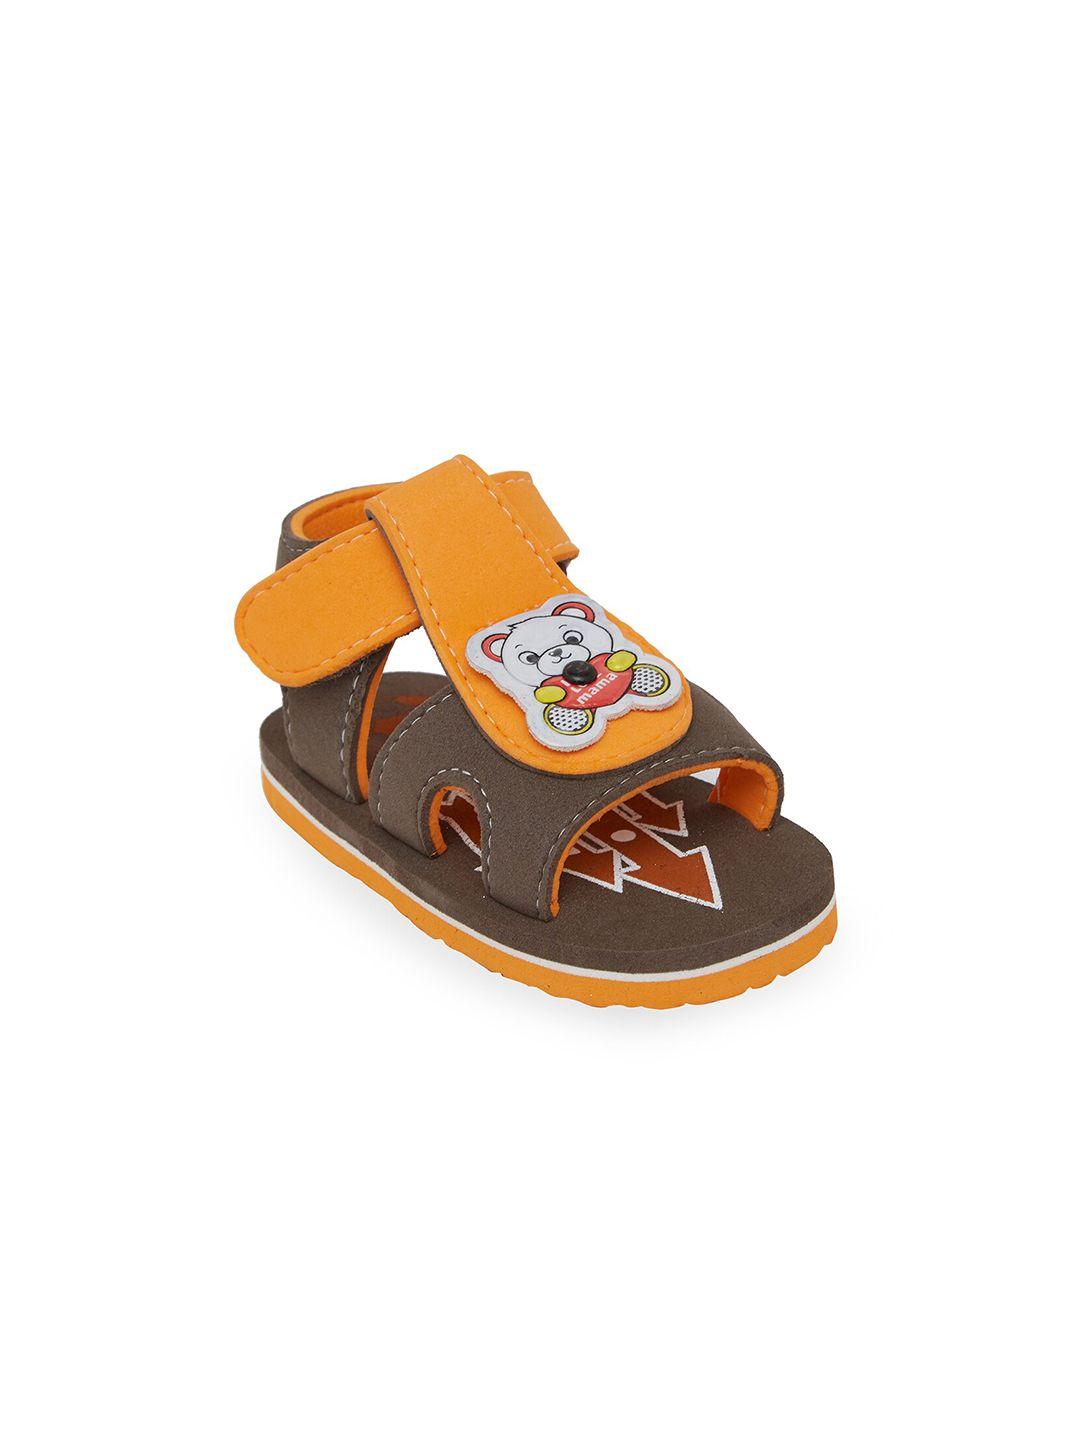 chiu kids orange & brown colourblocked chu chu comfort sandals